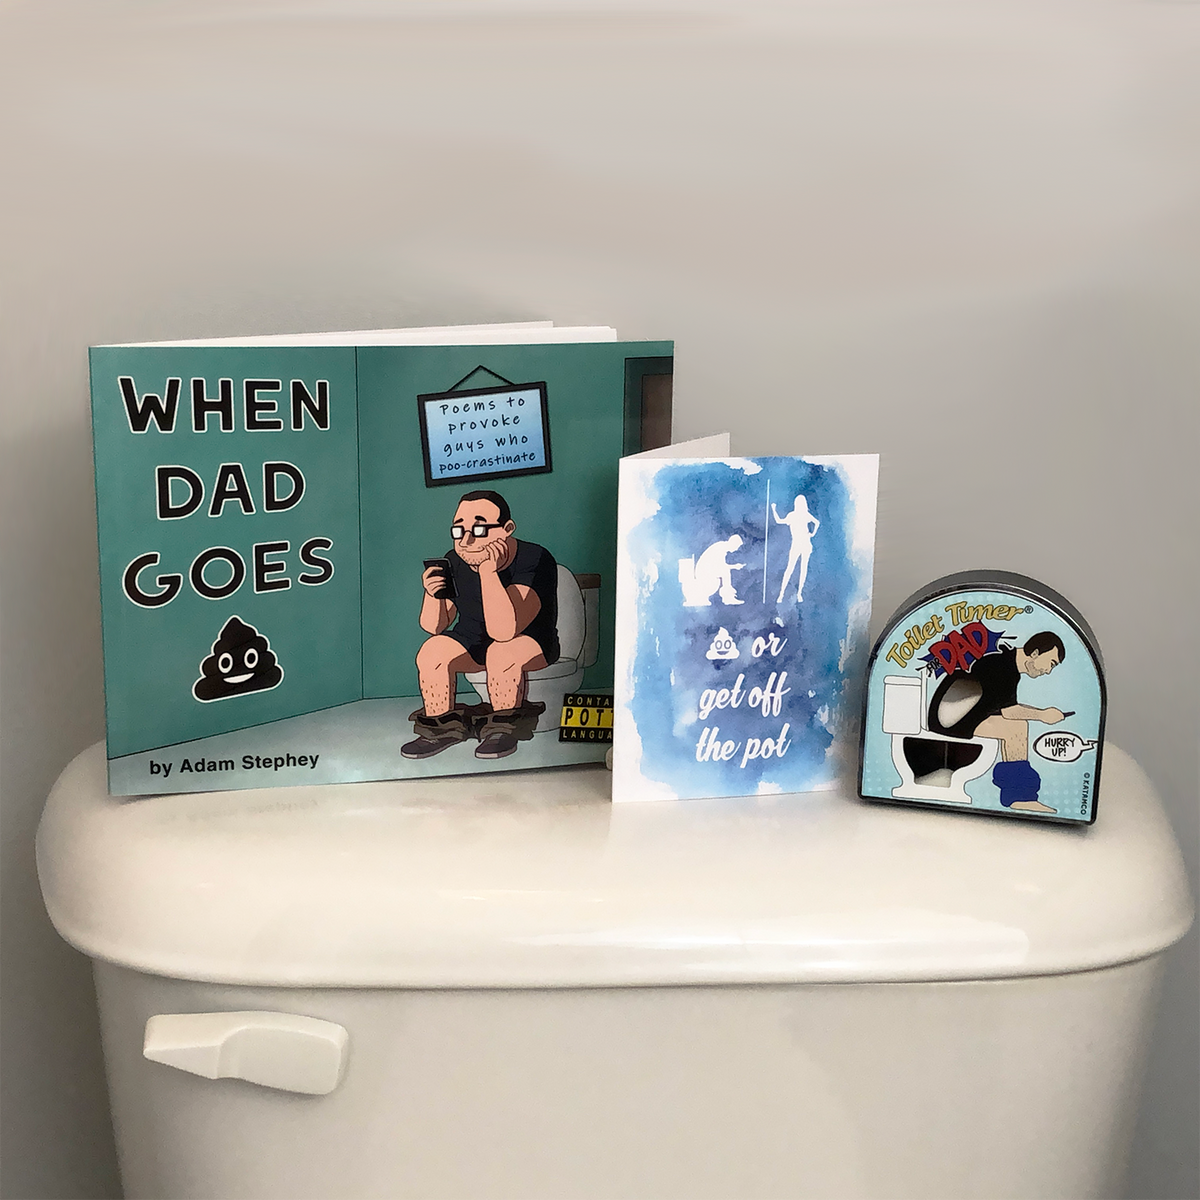 Katamco Toilet Timer (Office), Funny Gift for Men, Husband, Dad, Birthday,  Christmas, Stocking Stuffer. As seen on Shark Tank.